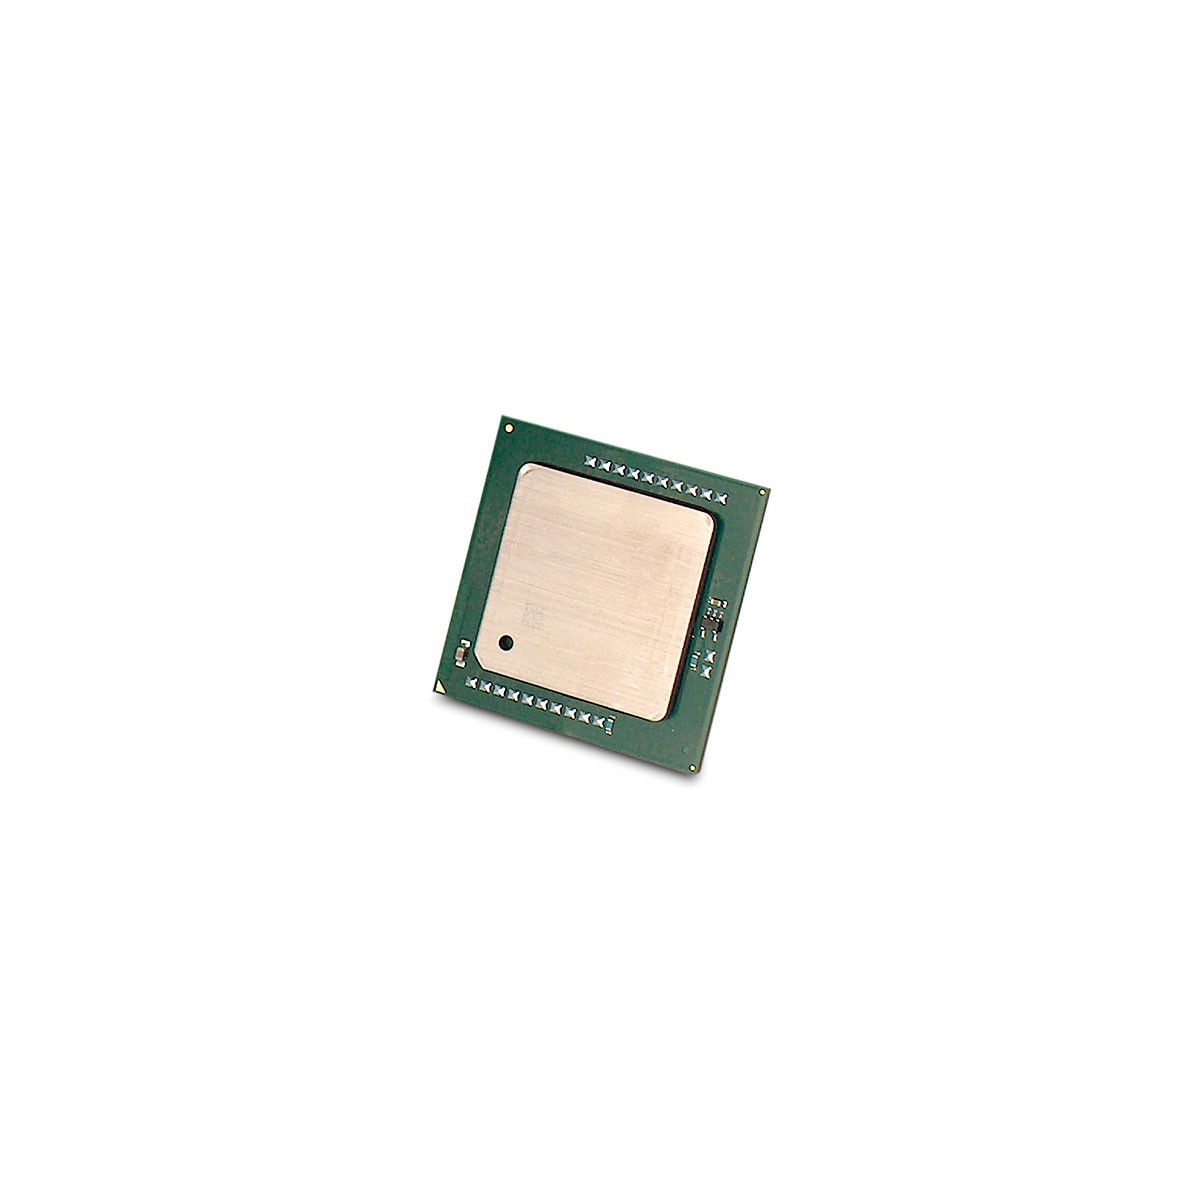 HPE Xeon E5620 Xeon 2.4 GHz - Skt 1366 Westmere 32 nm - 80 W